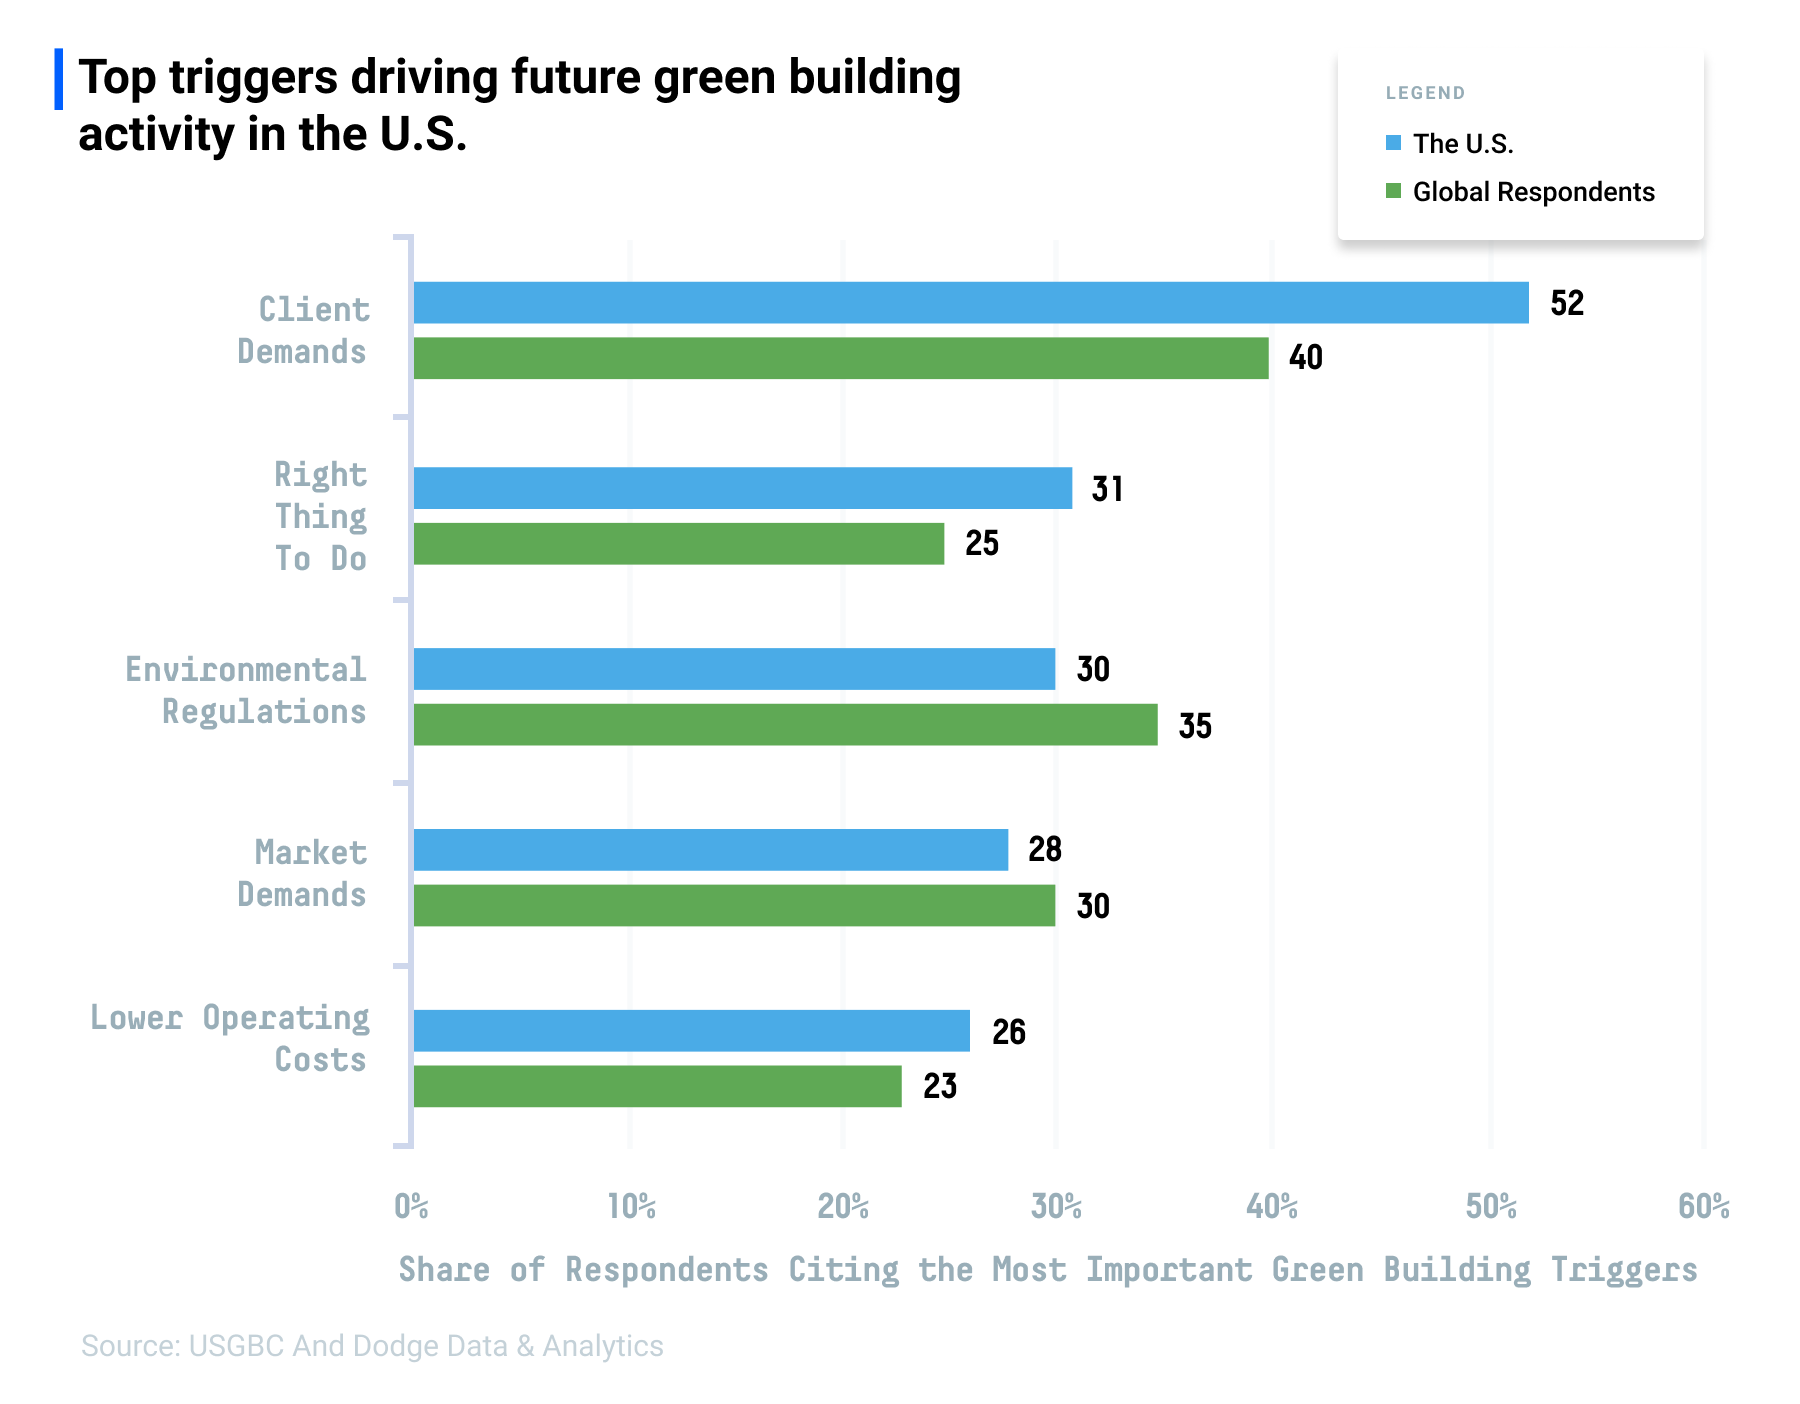 Client demands is main market driver behind green building activity